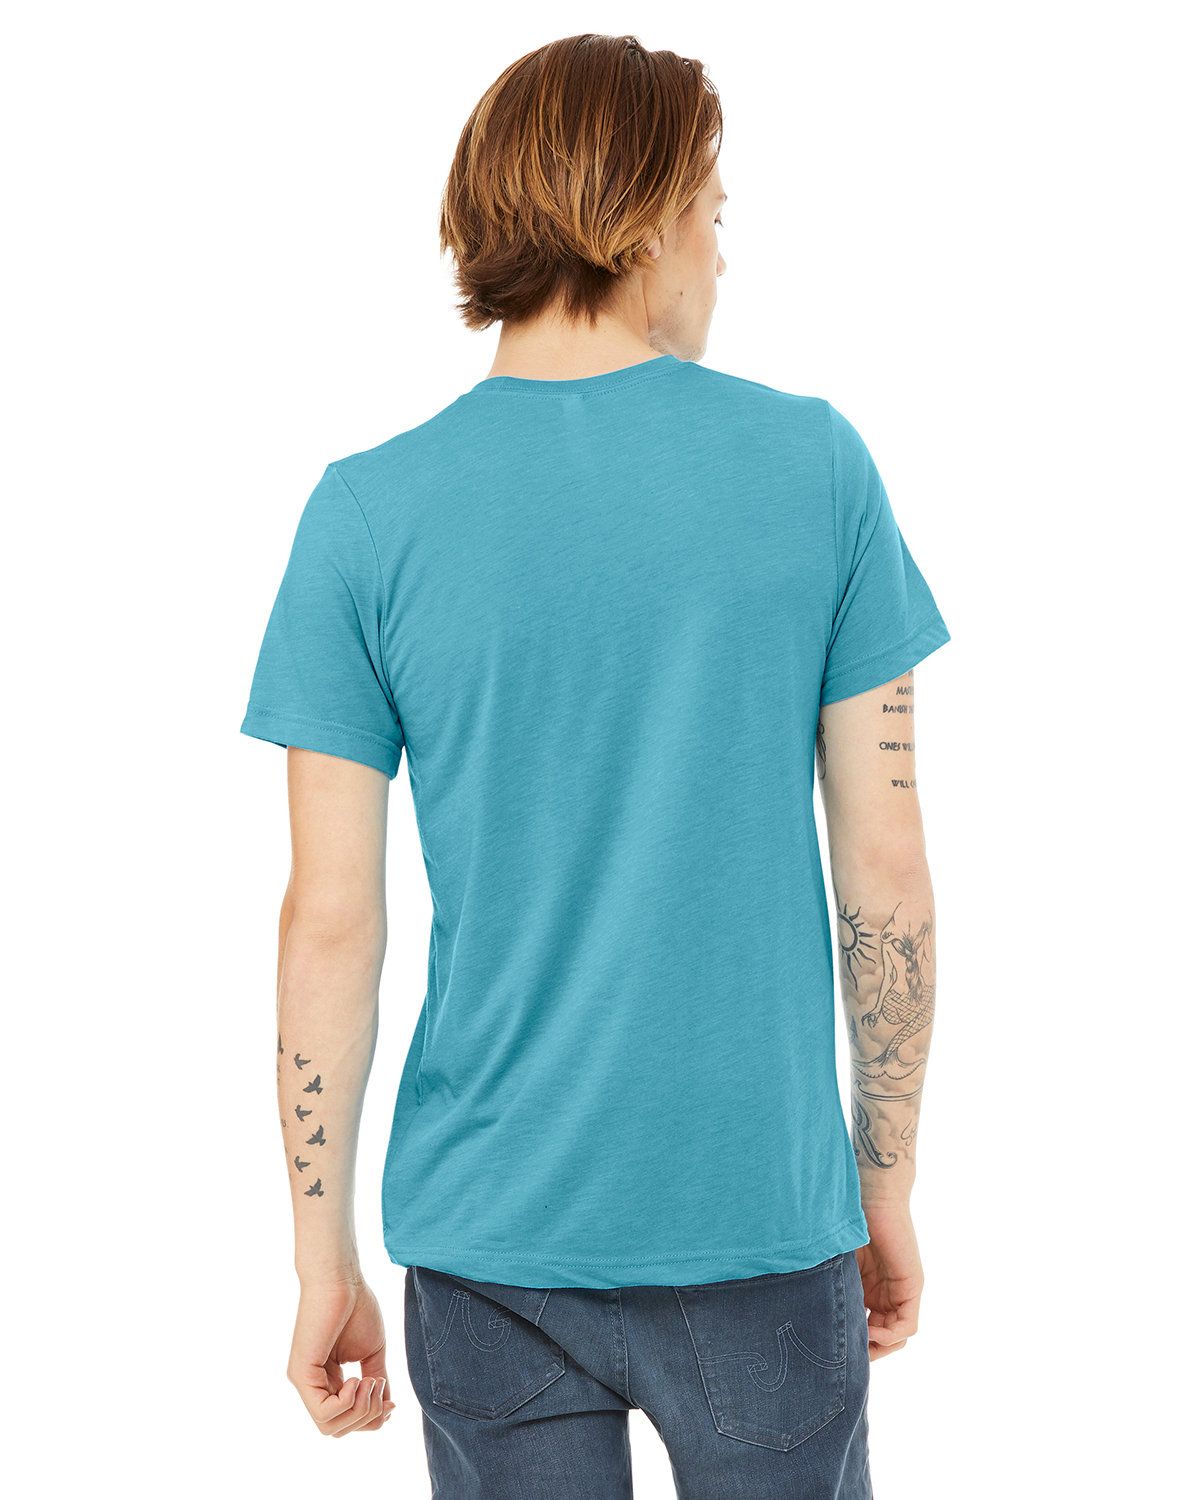 'Bella Canvas 3413C Unisex Triblend T Shirt'